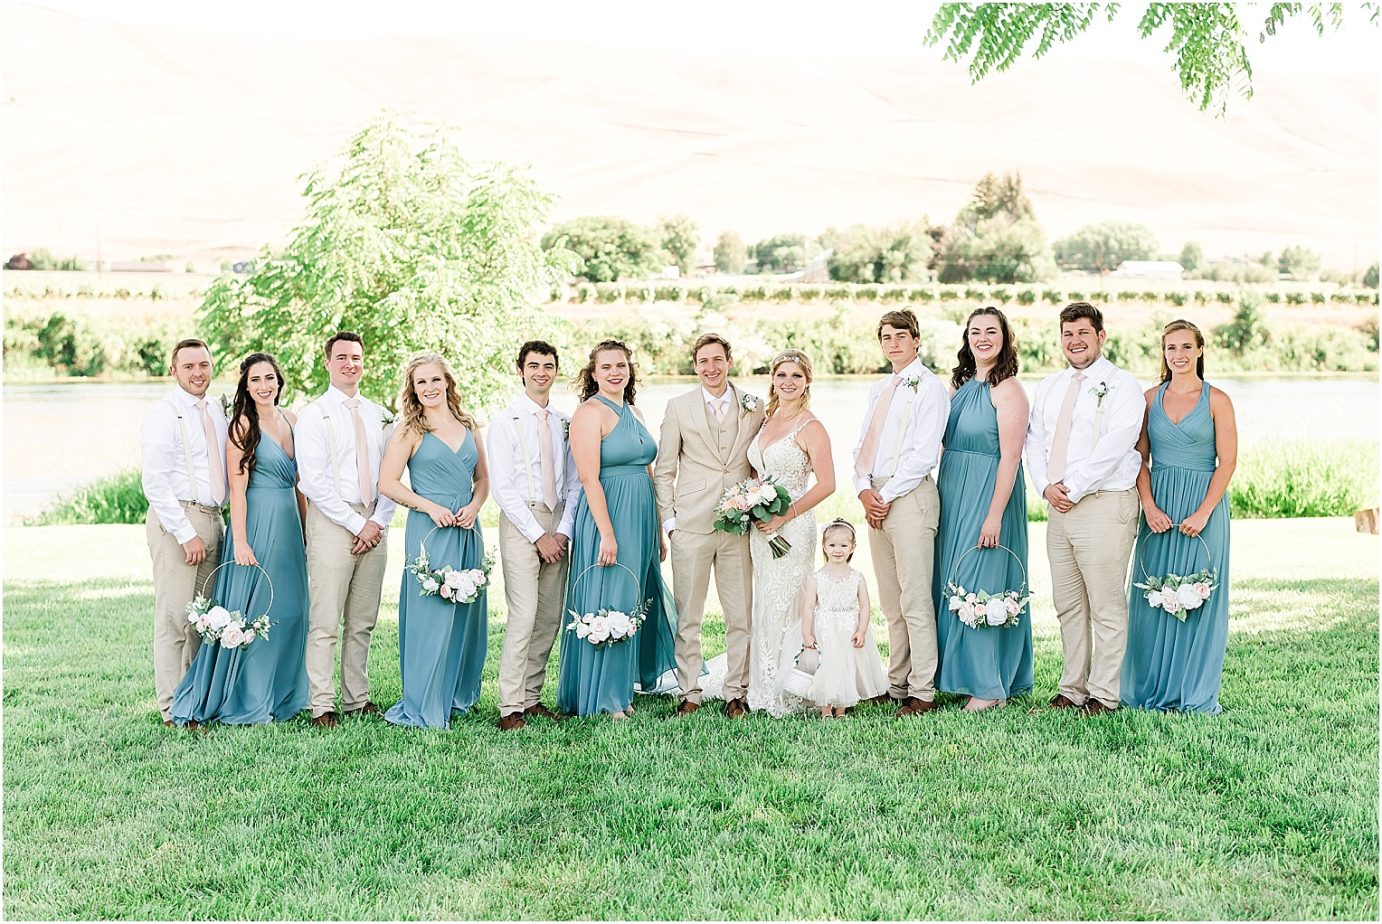 Prosser Farm Wedding Yakima Photographer Jake and Bri bridal party in dusty blue dresses